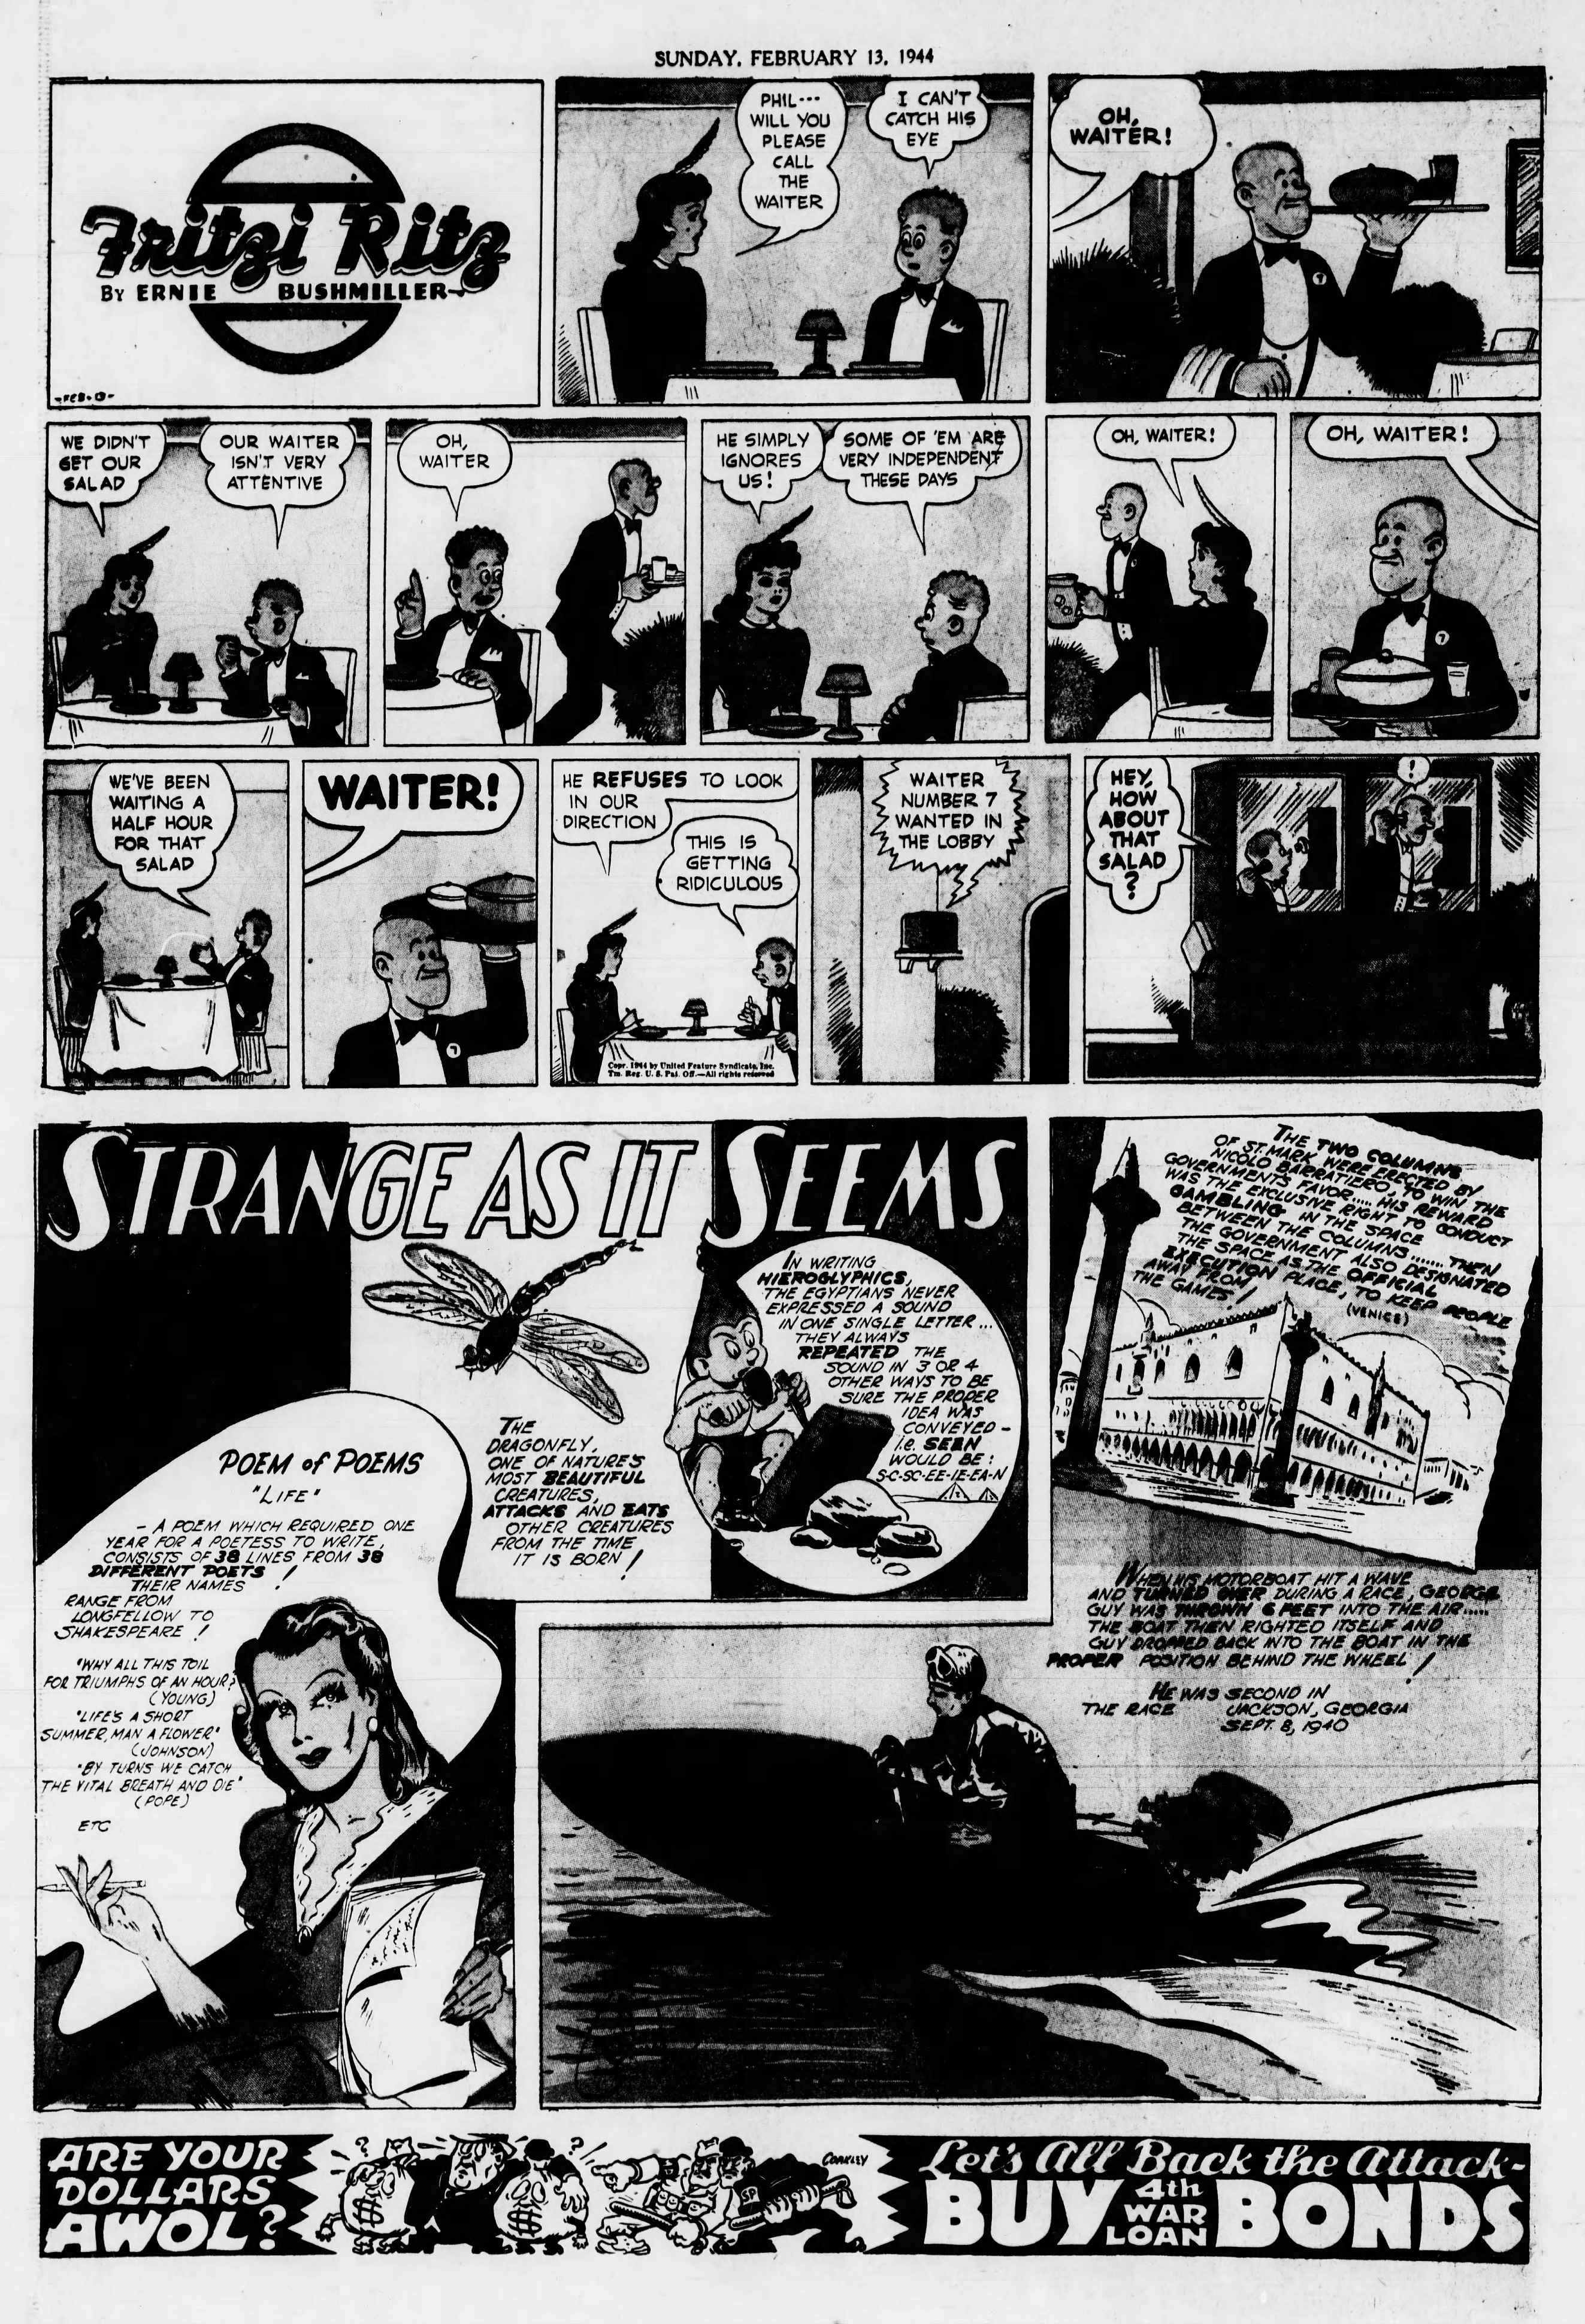 The_Brooklyn_Daily_Eagle_Sun__Feb_13__1944_(9).jpg